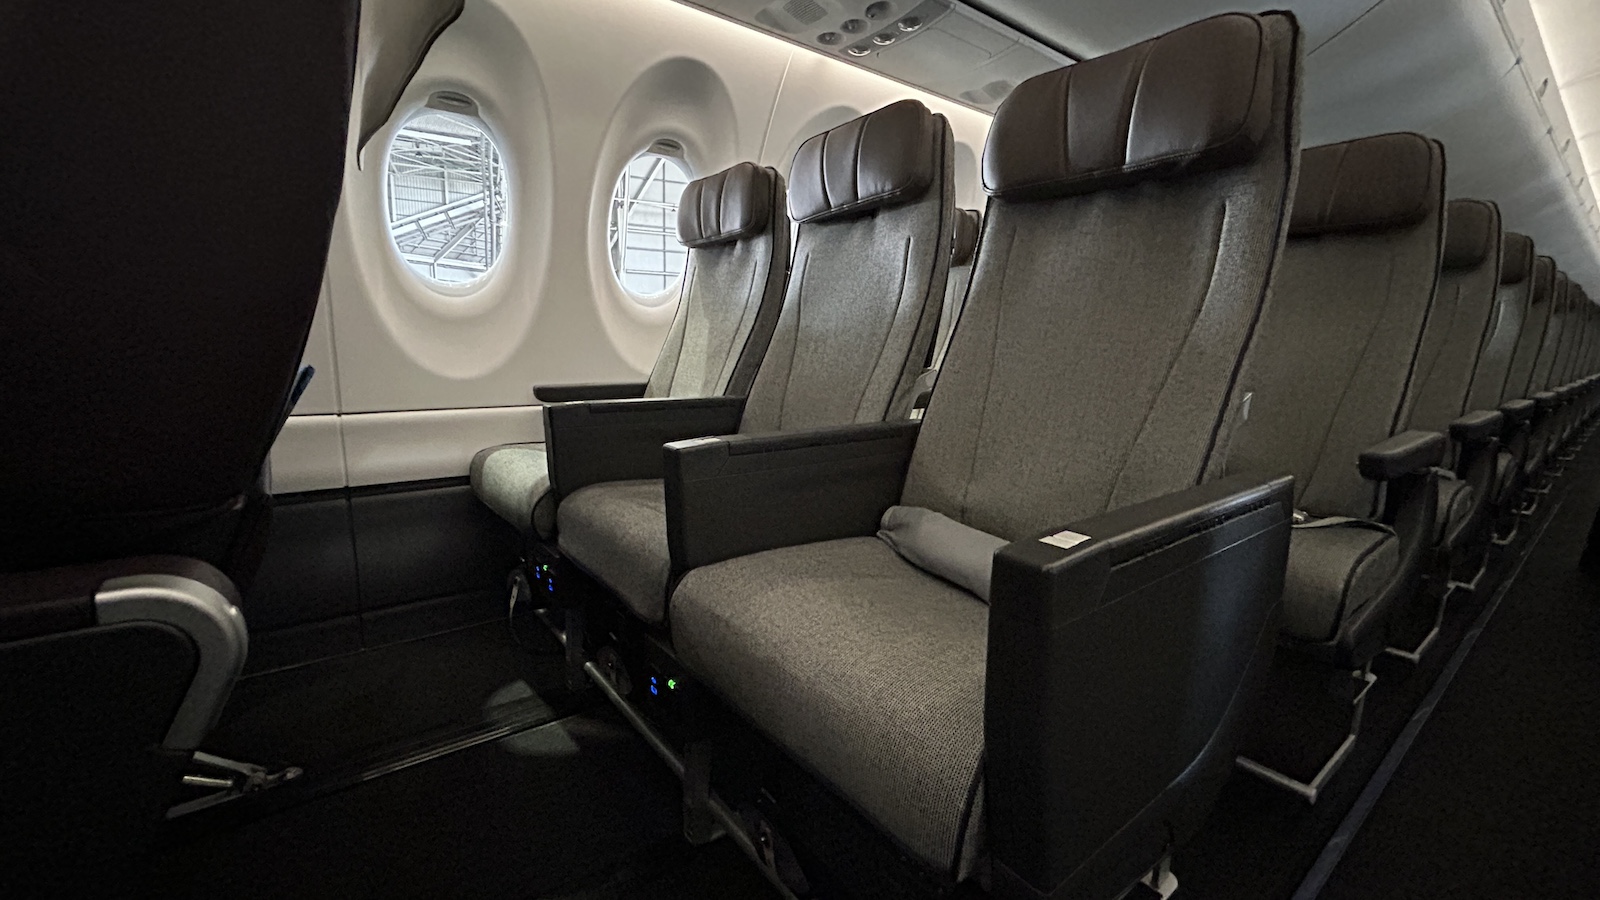 Qantaslink A220 Economy Class Fabric Seats 3 Row Point Hacks by Daniel Sciberras